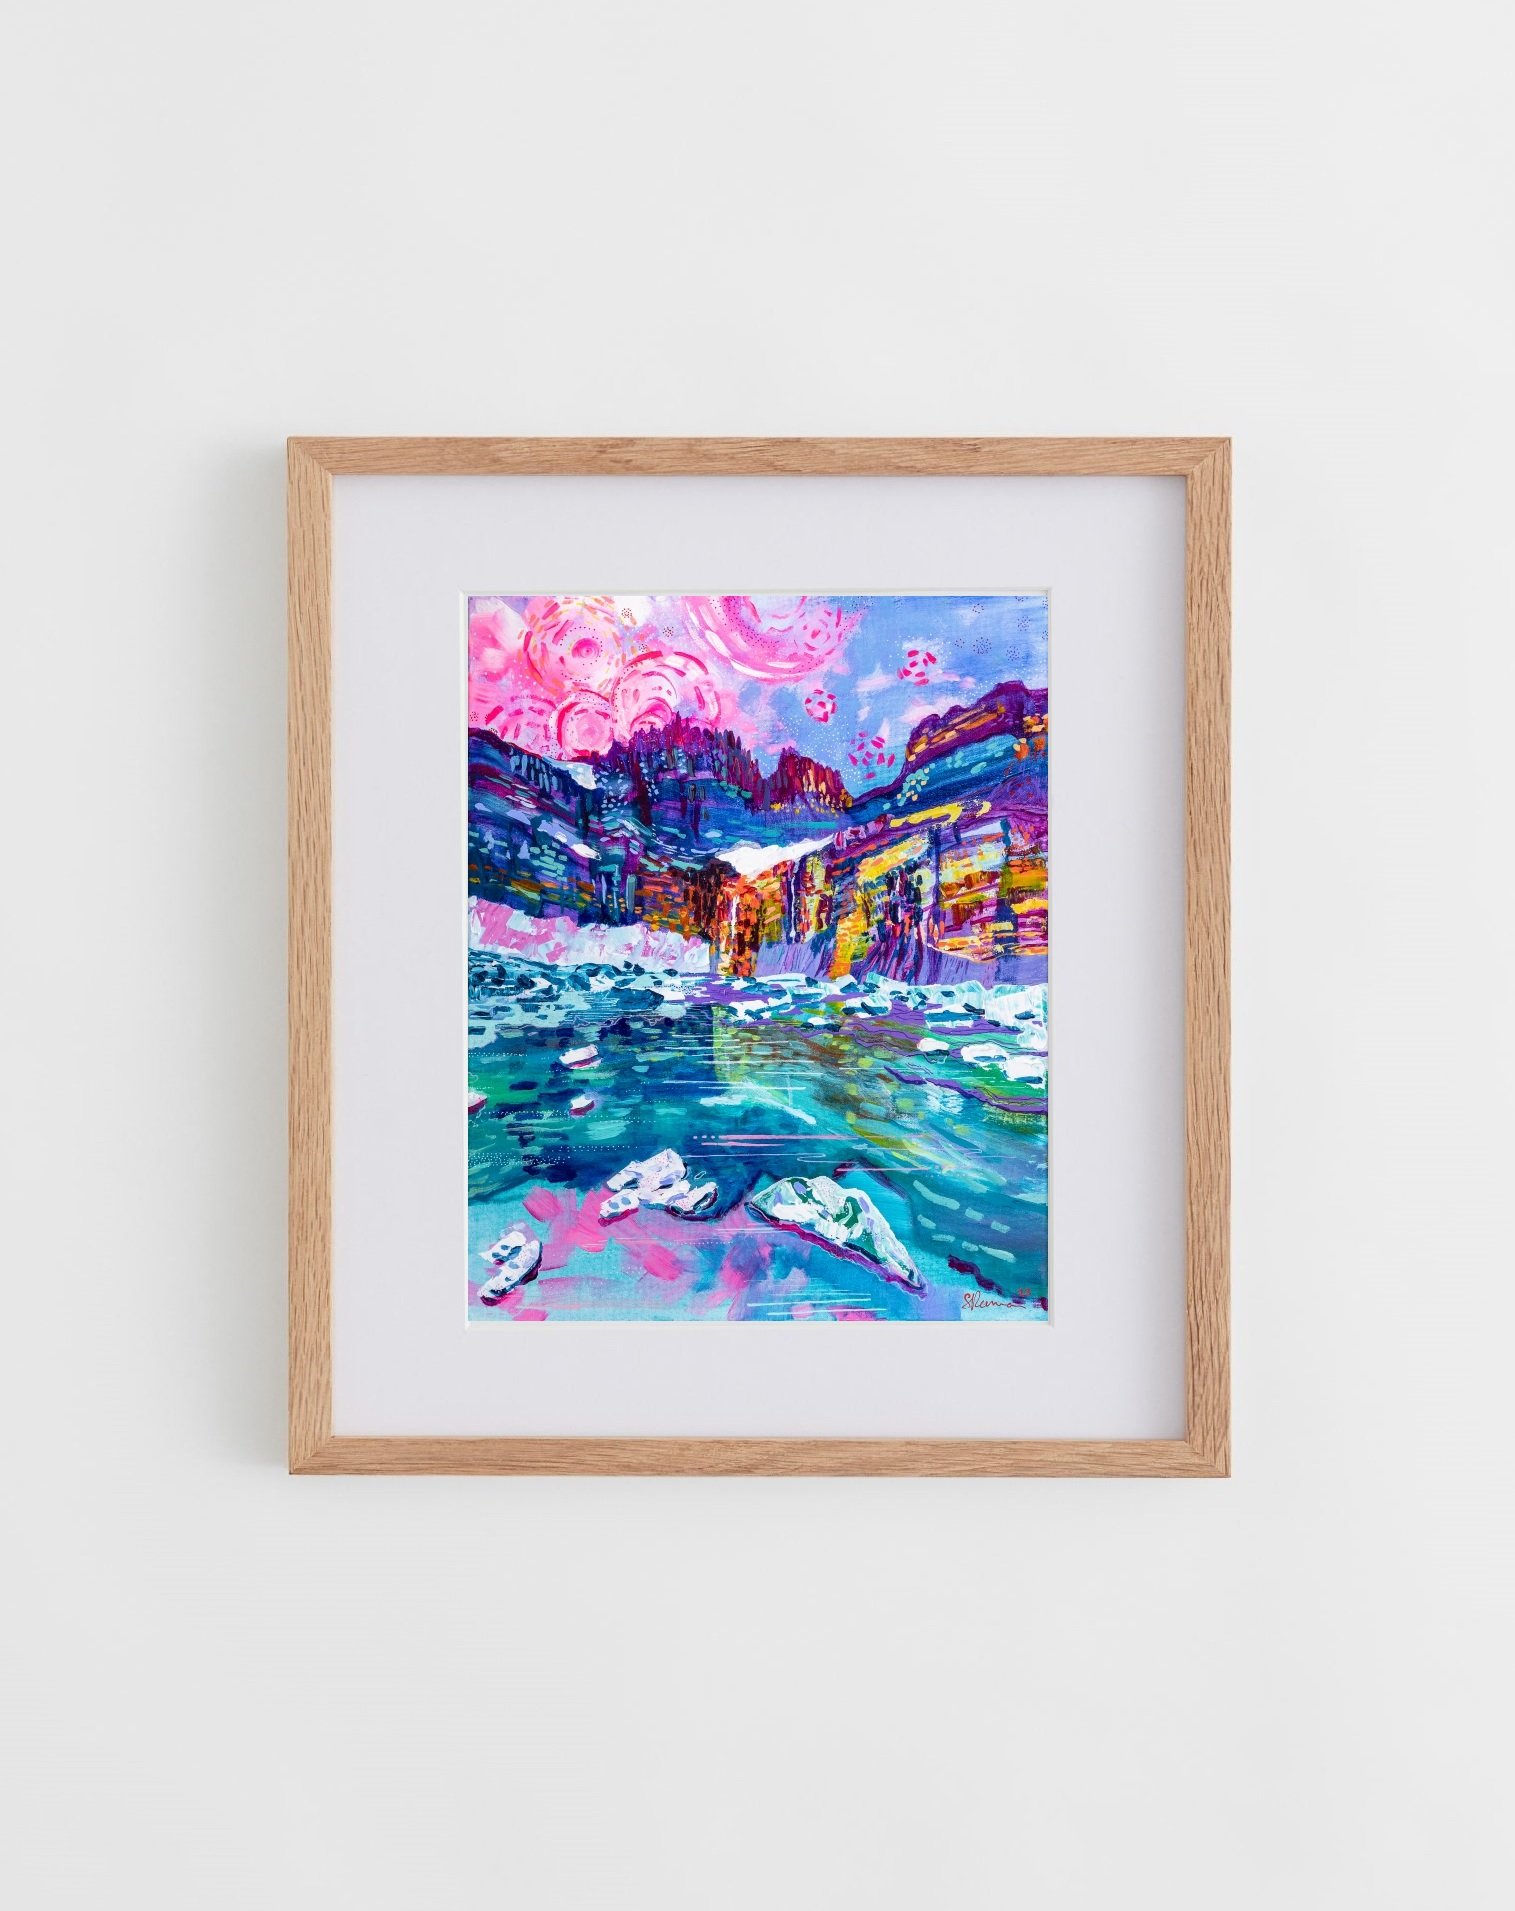 Rocky Mountain National Park: Rocky Mountain Twilight, 16”x20” — Shannon N  Roman Fine Art